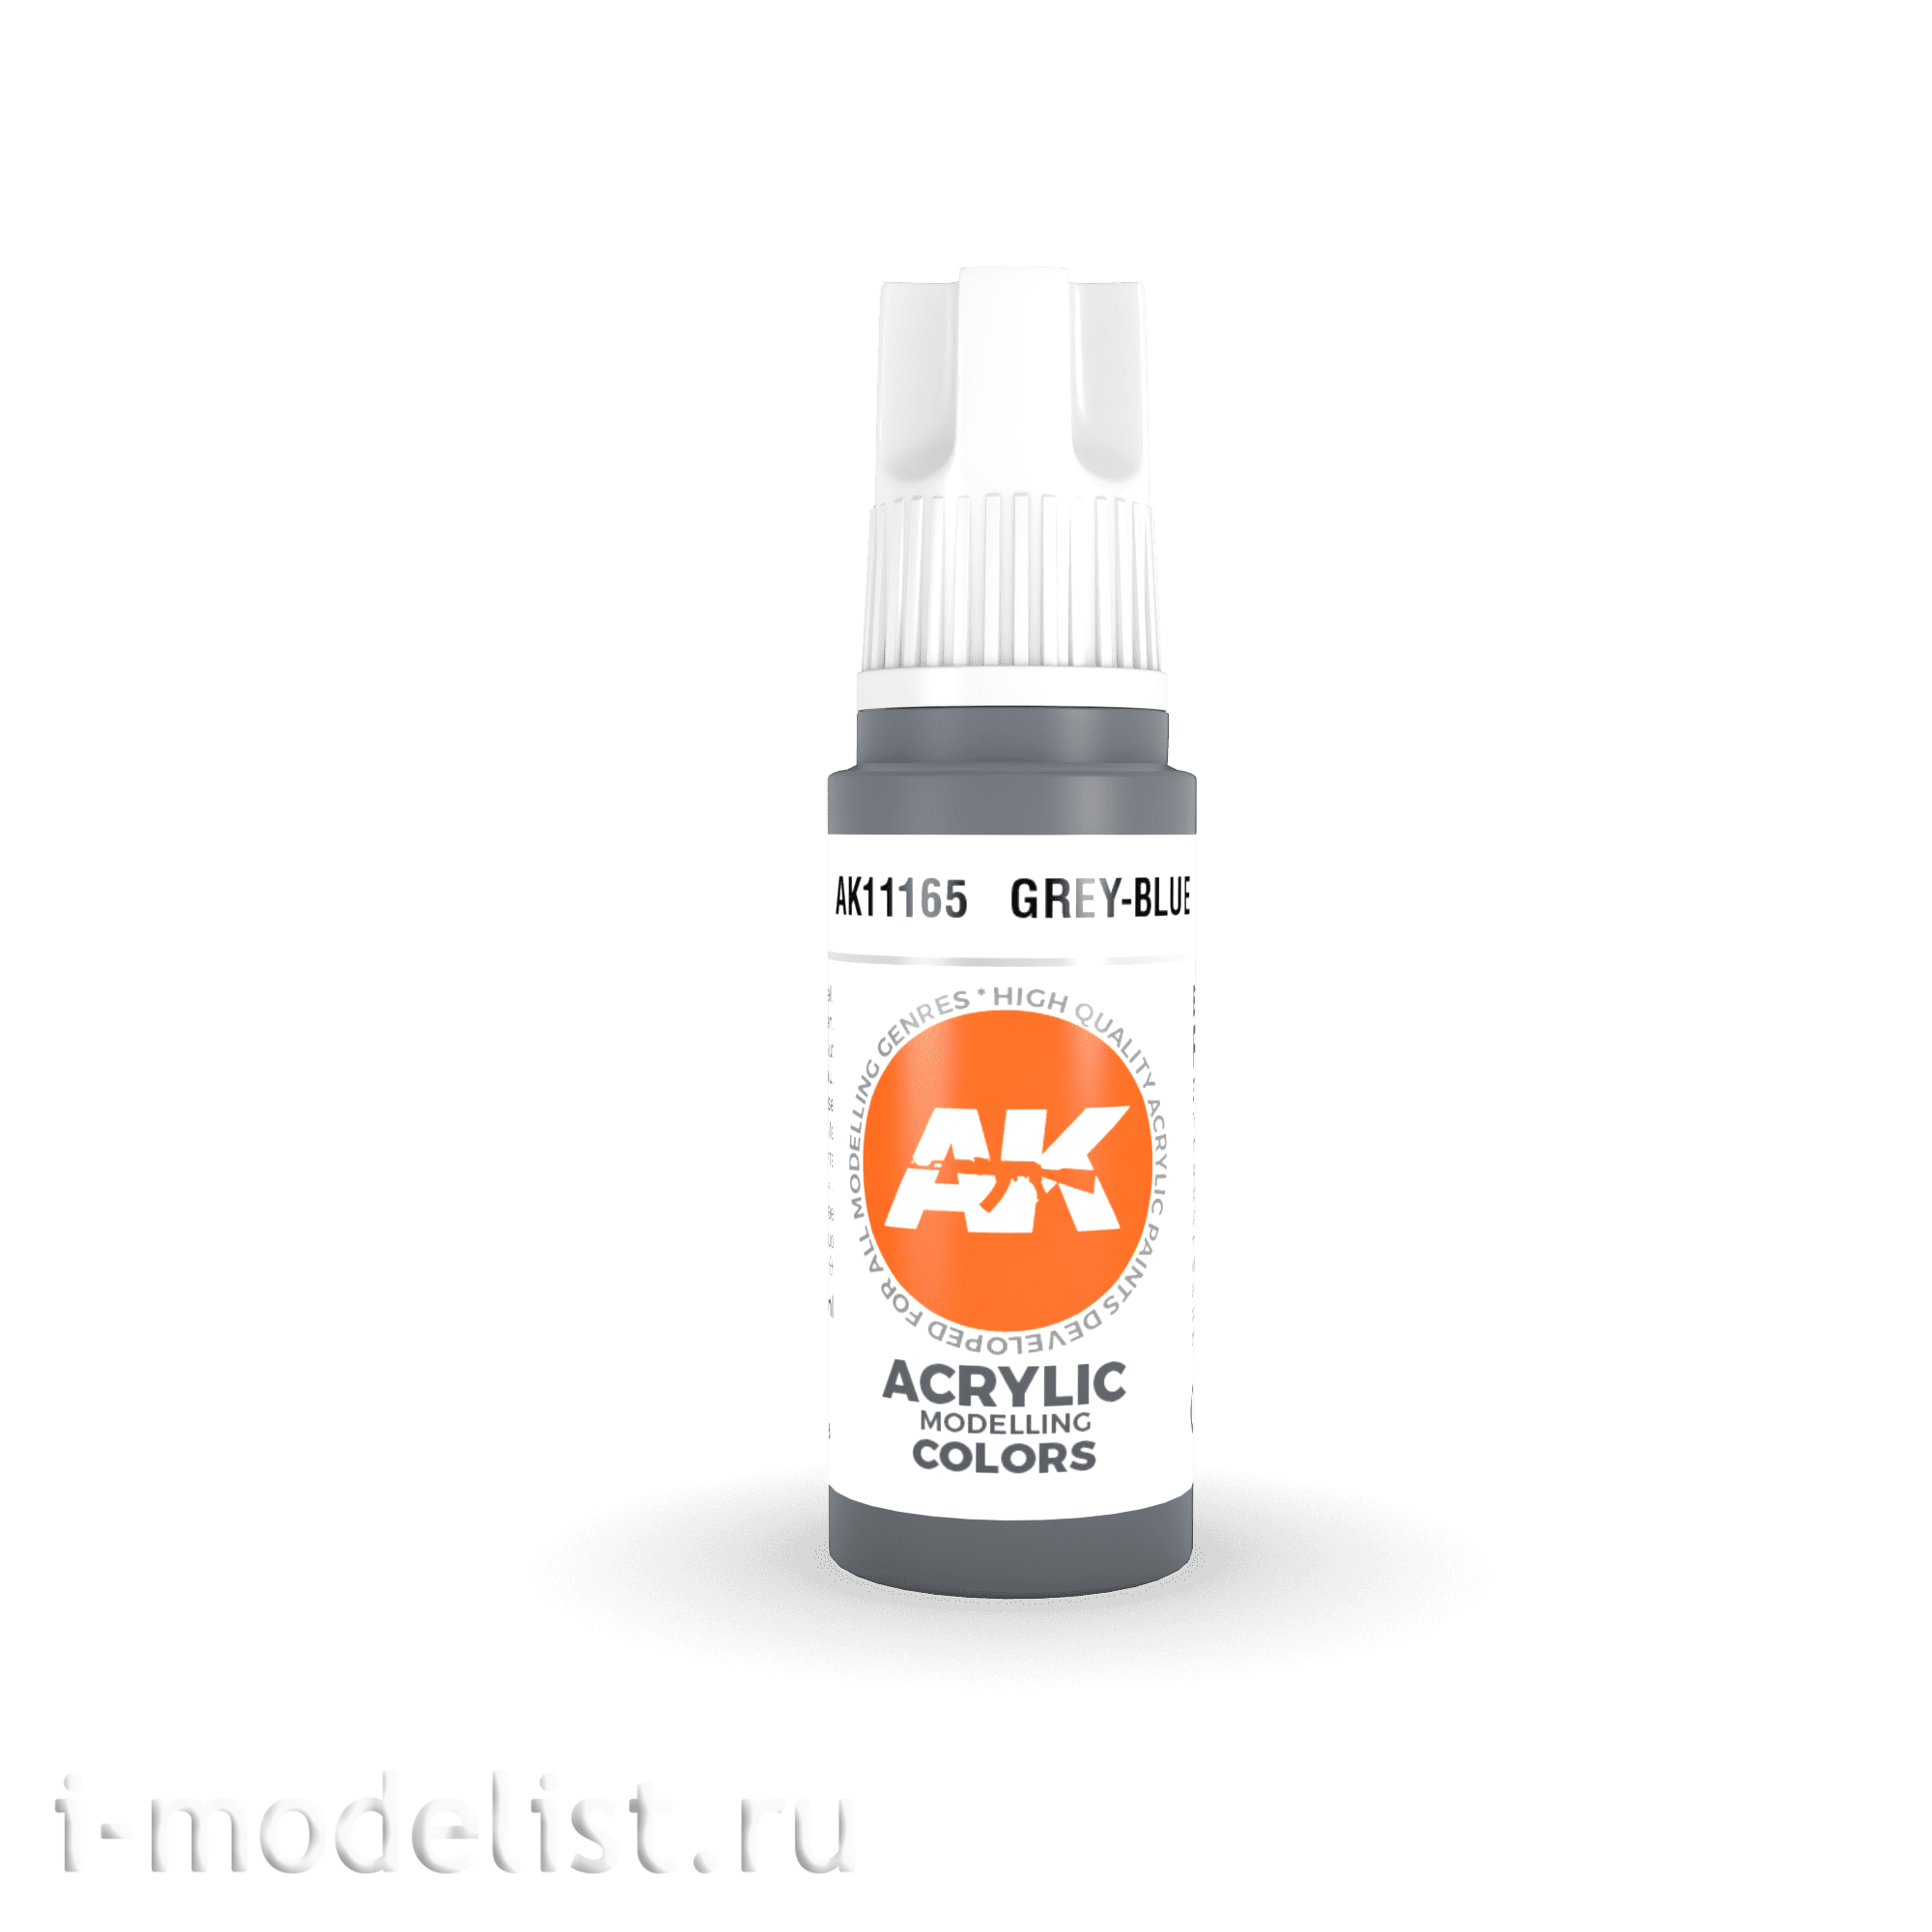 AK11165 AK Interactive acrylic Paint 3rd Generation Grey-Blue 17ml